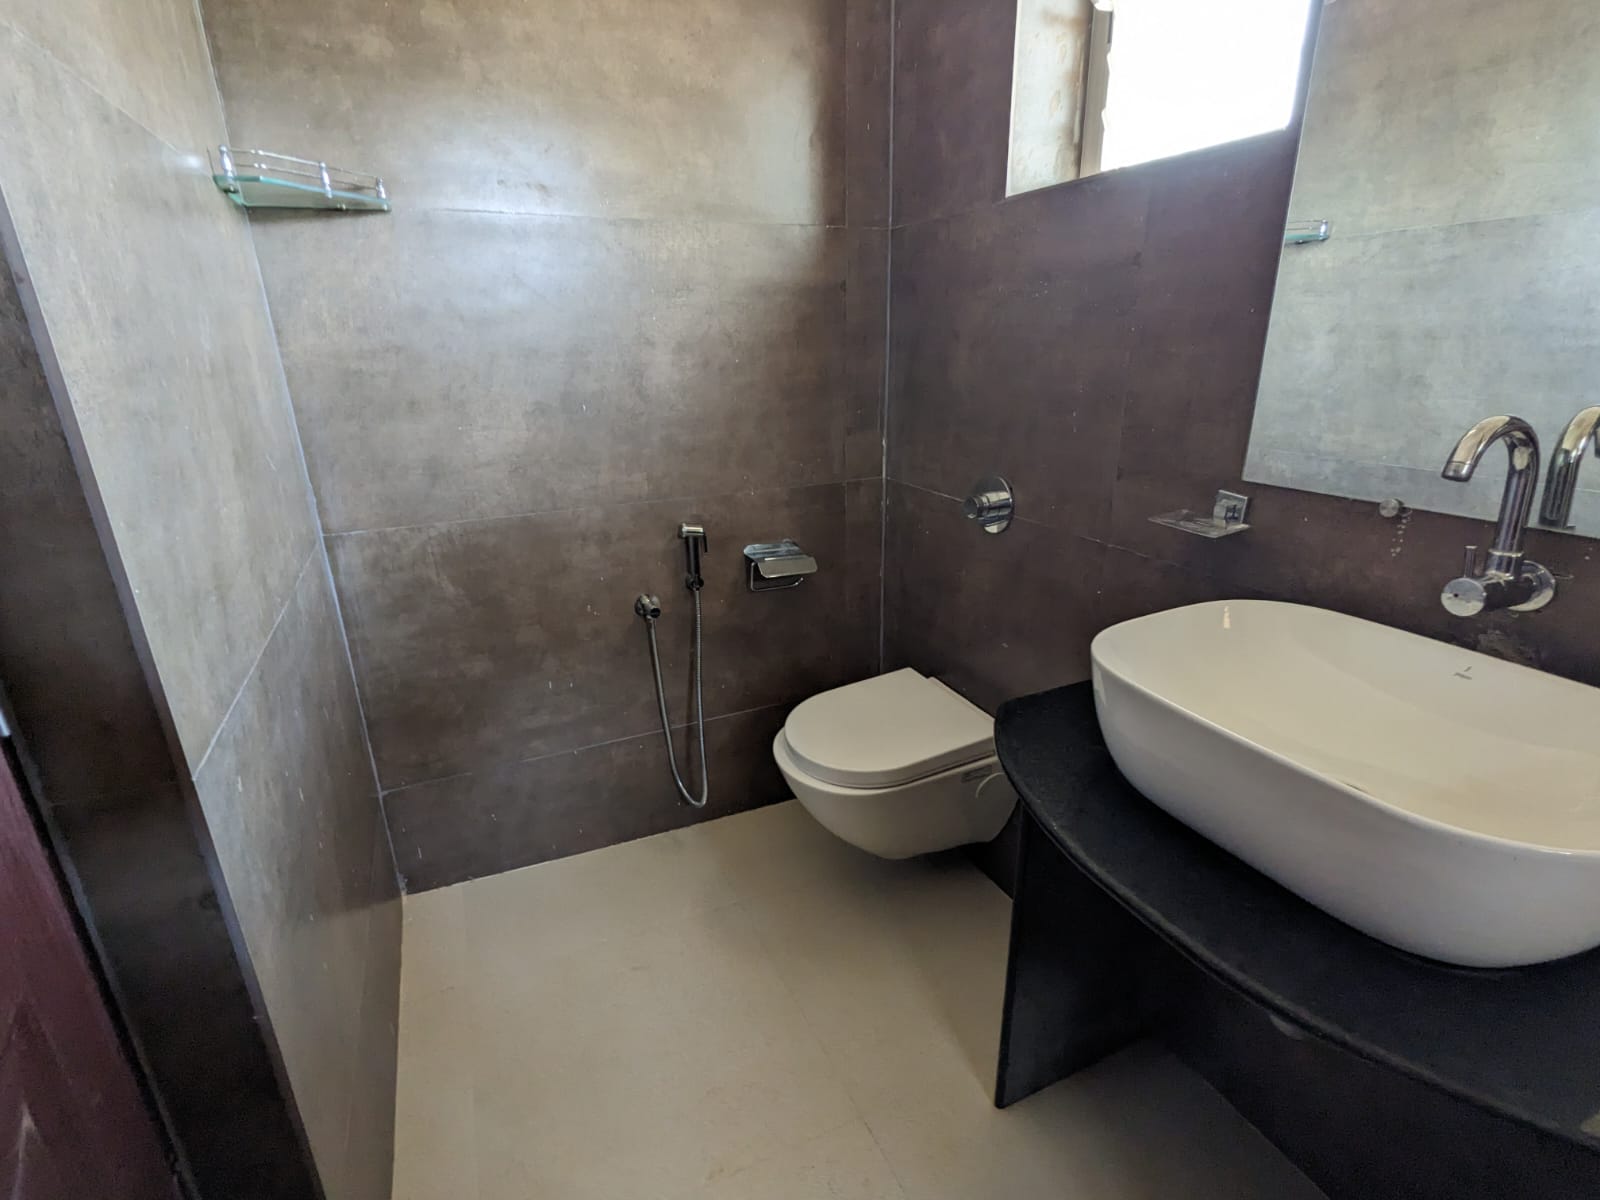 Ground floor bathroom toilet Villa 2